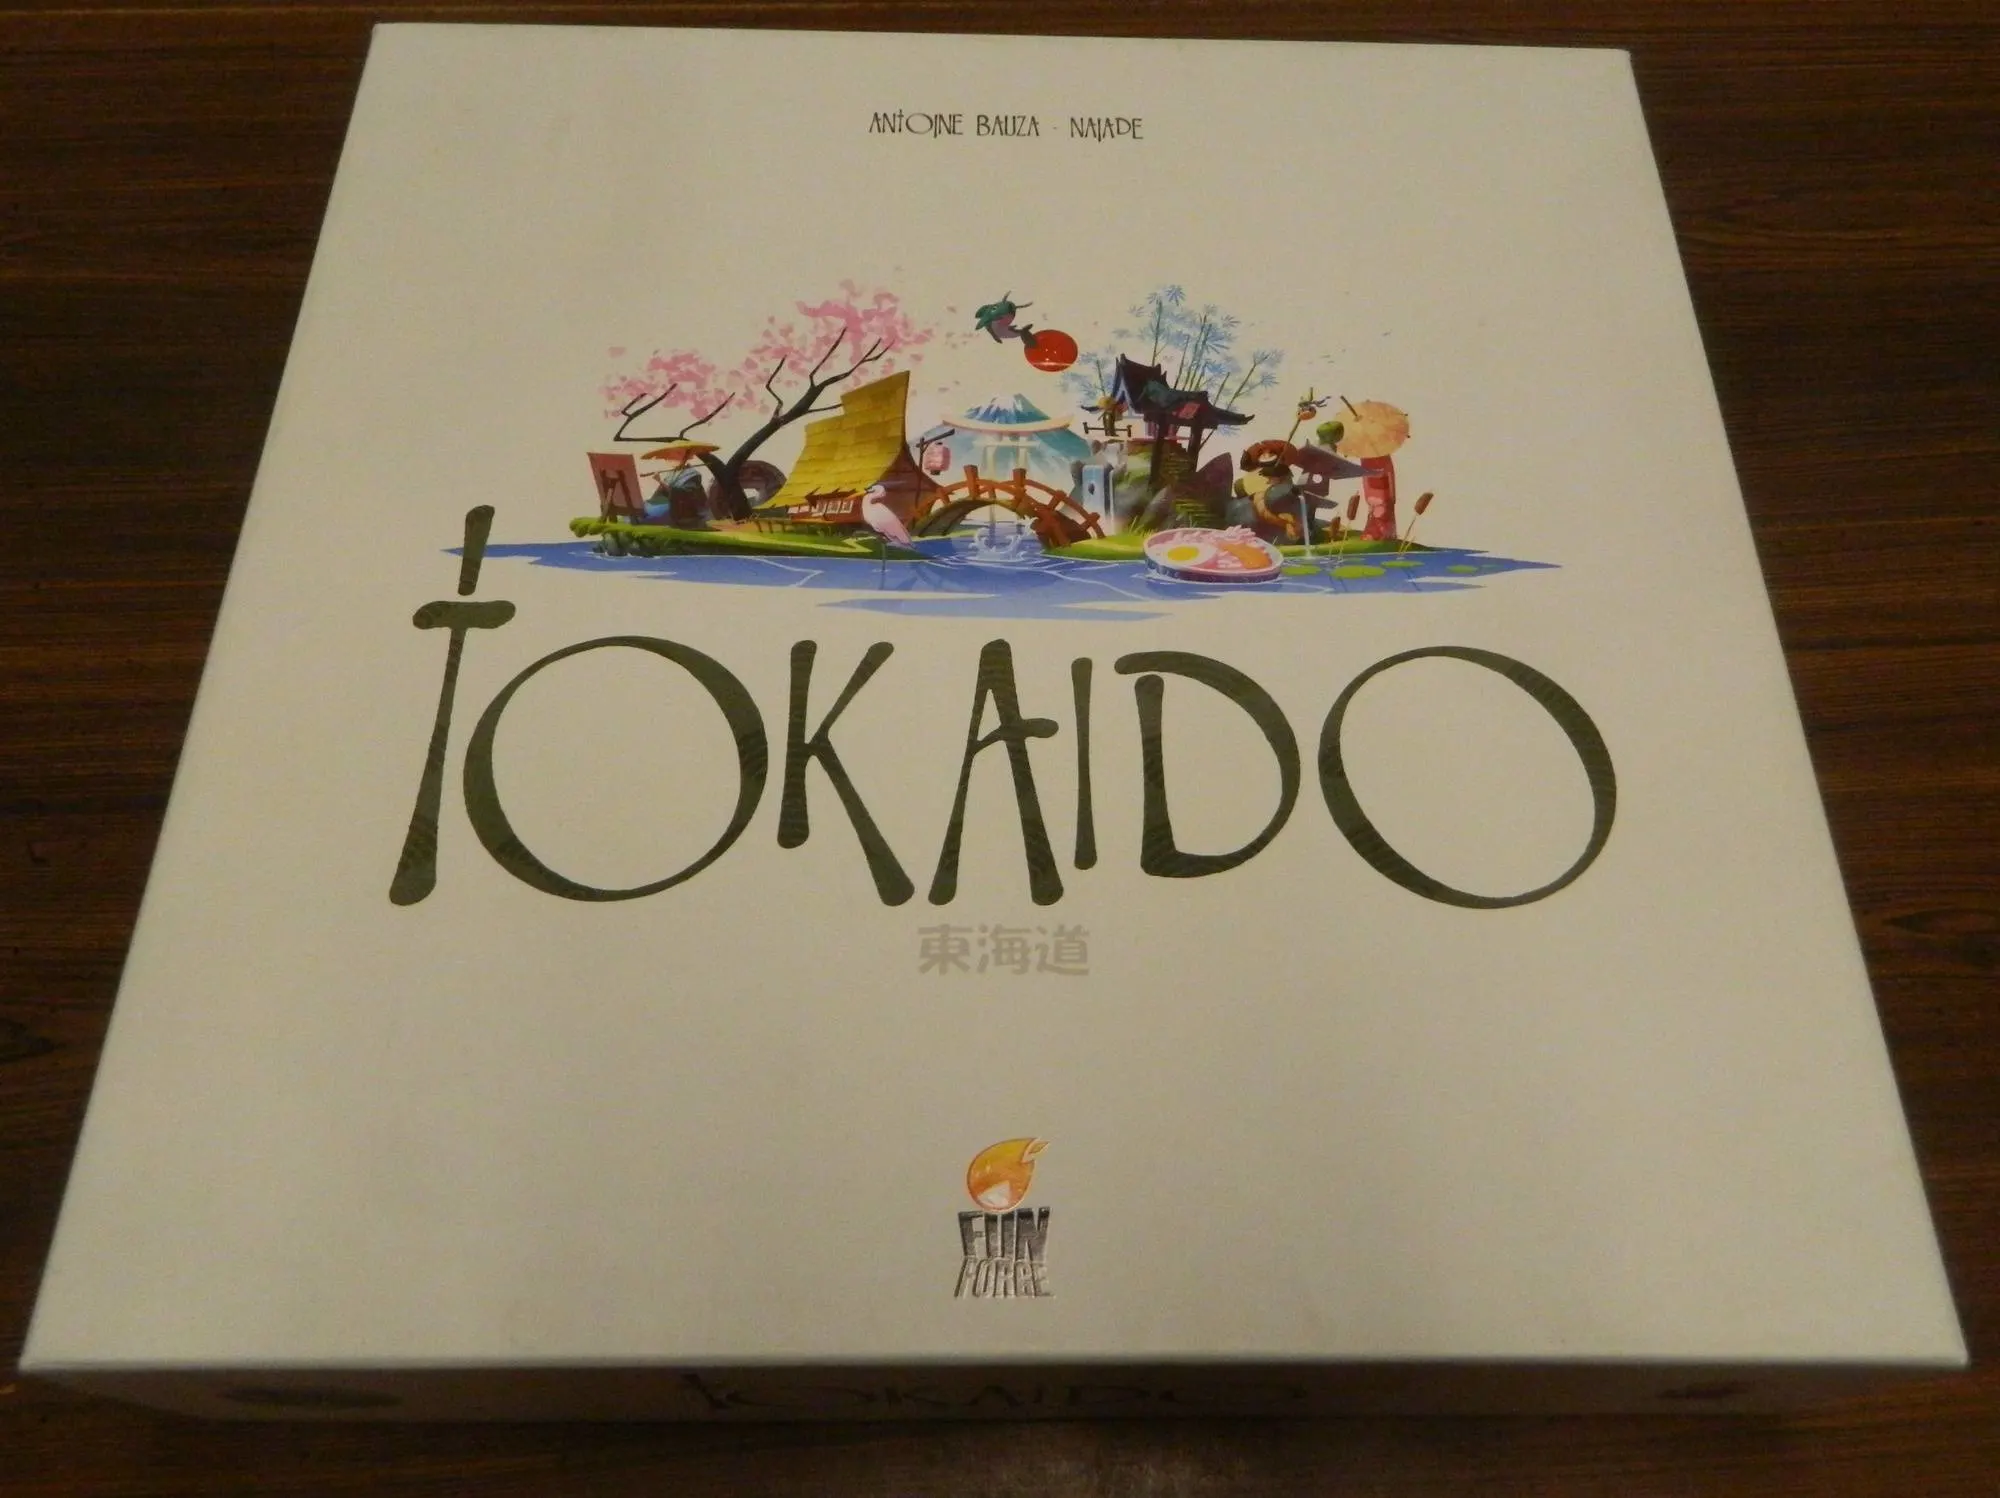 Box for Tokaido